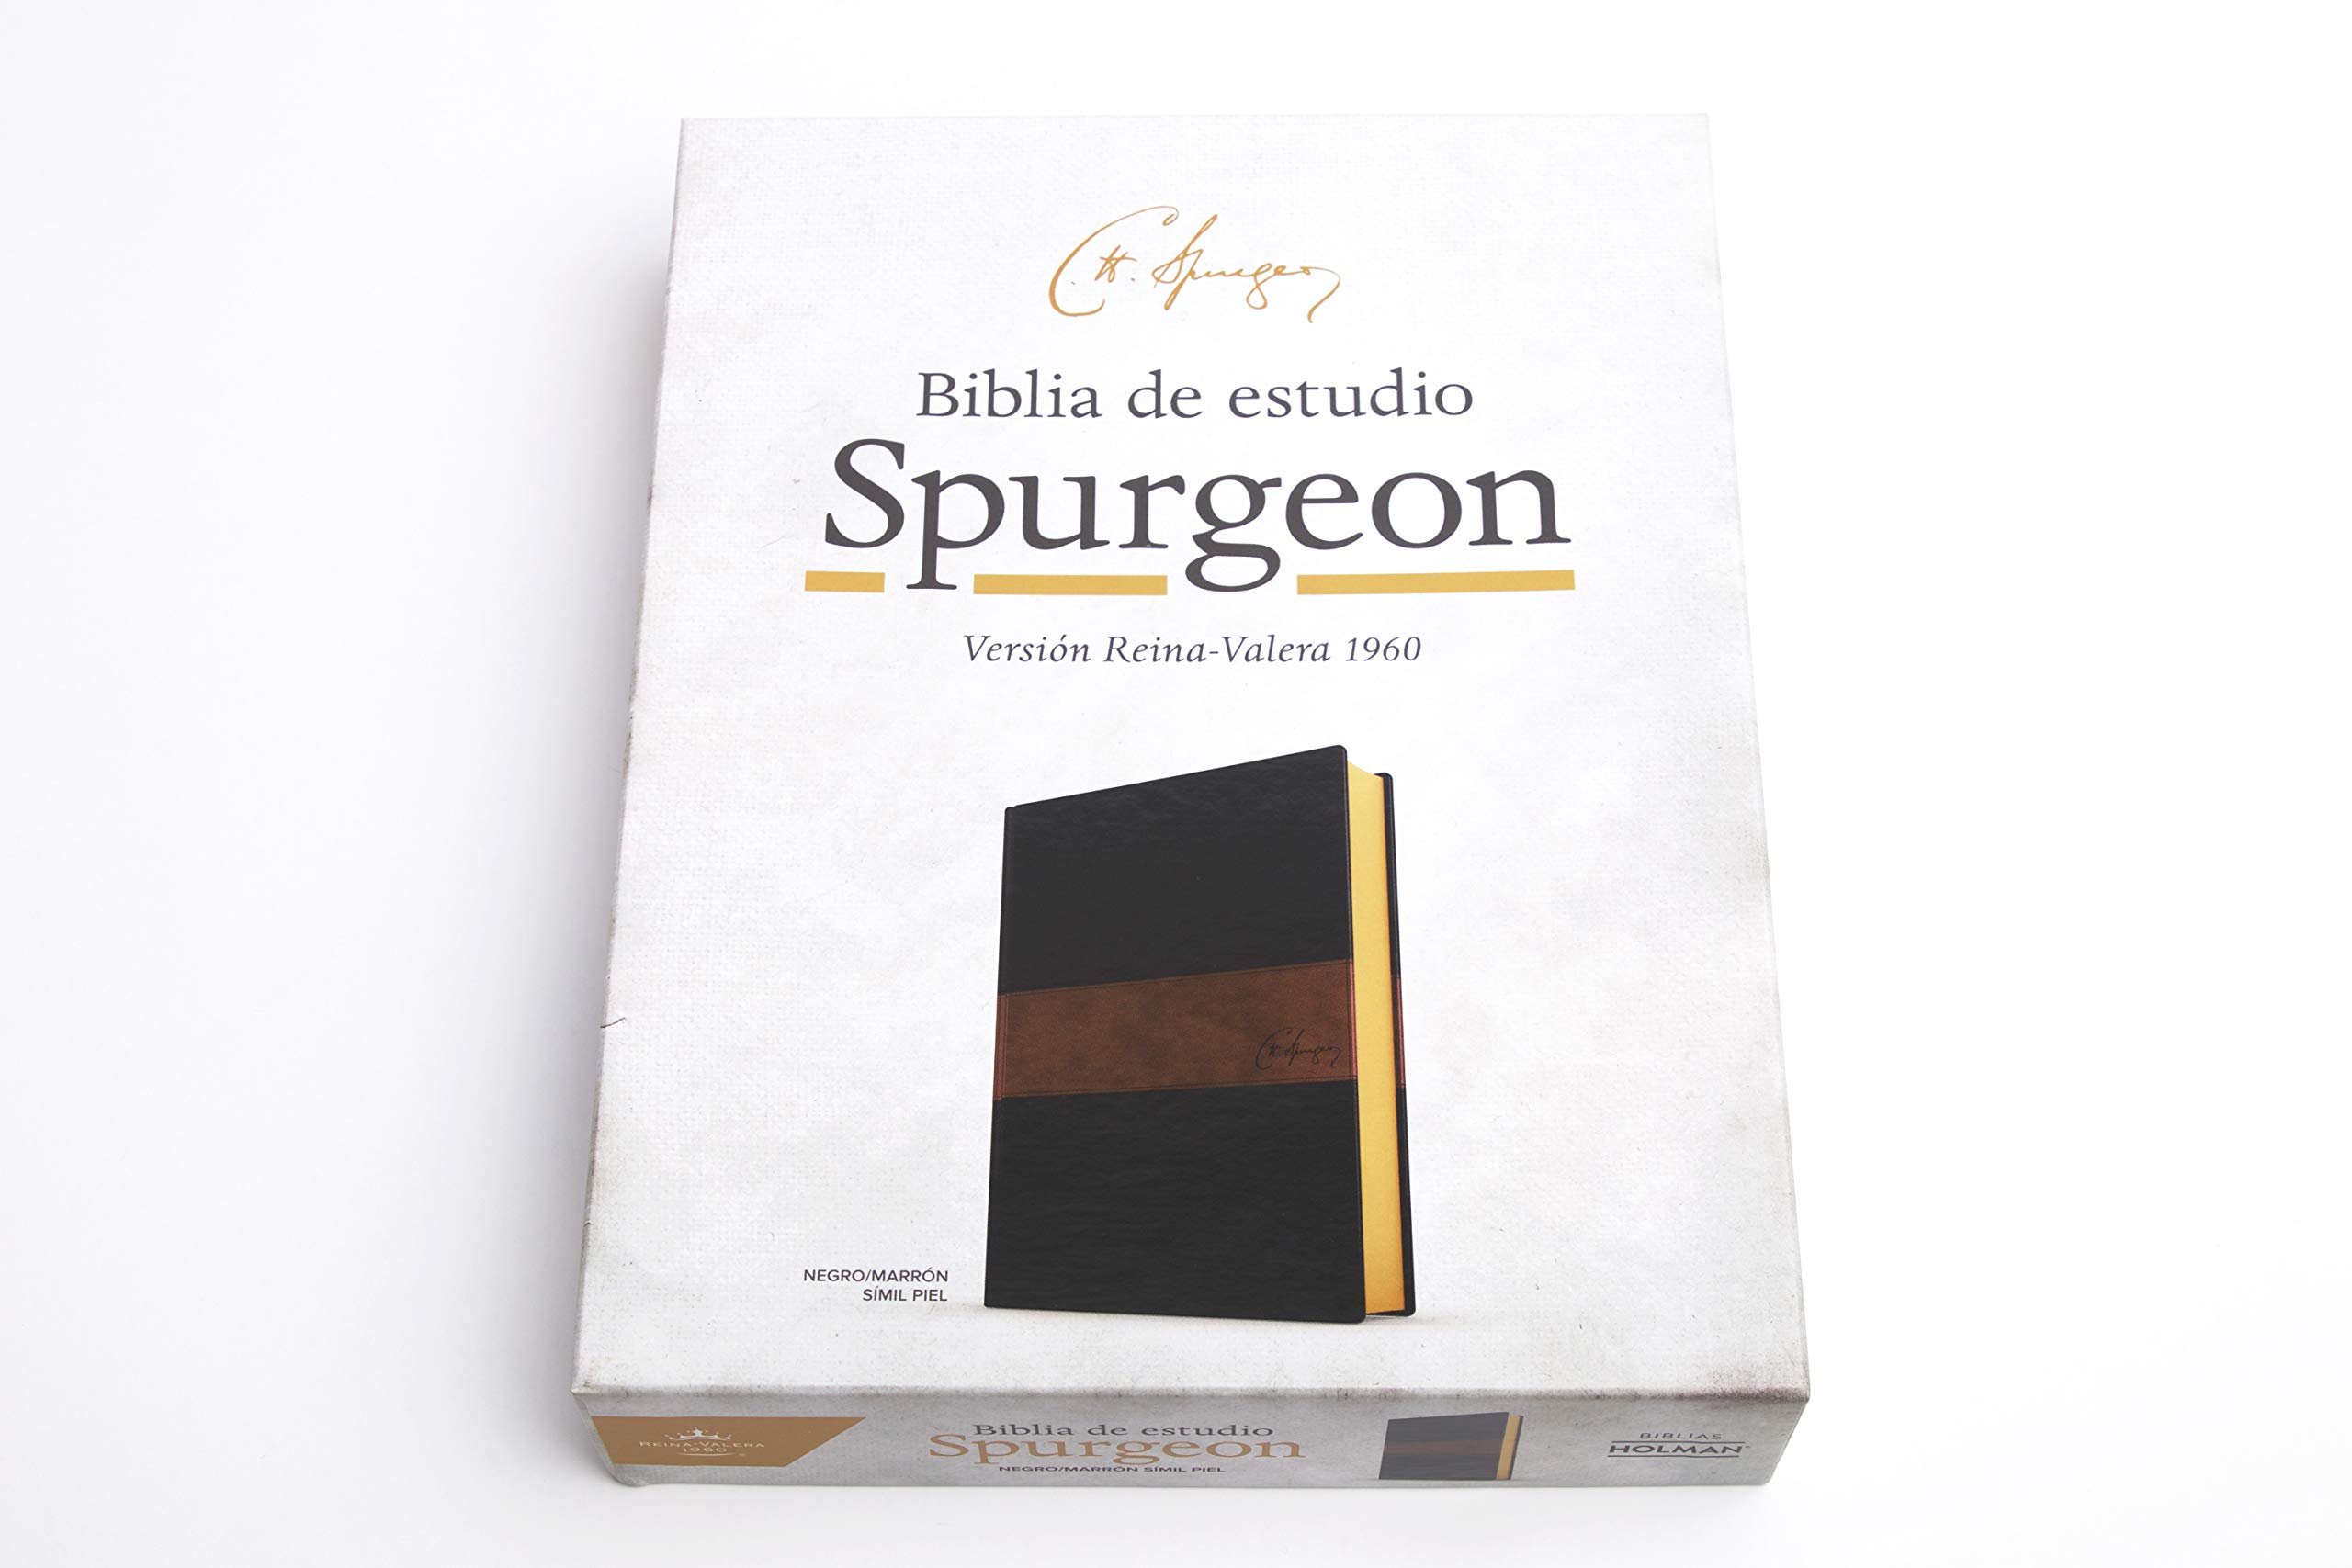 Biblia de estudio spurgeon